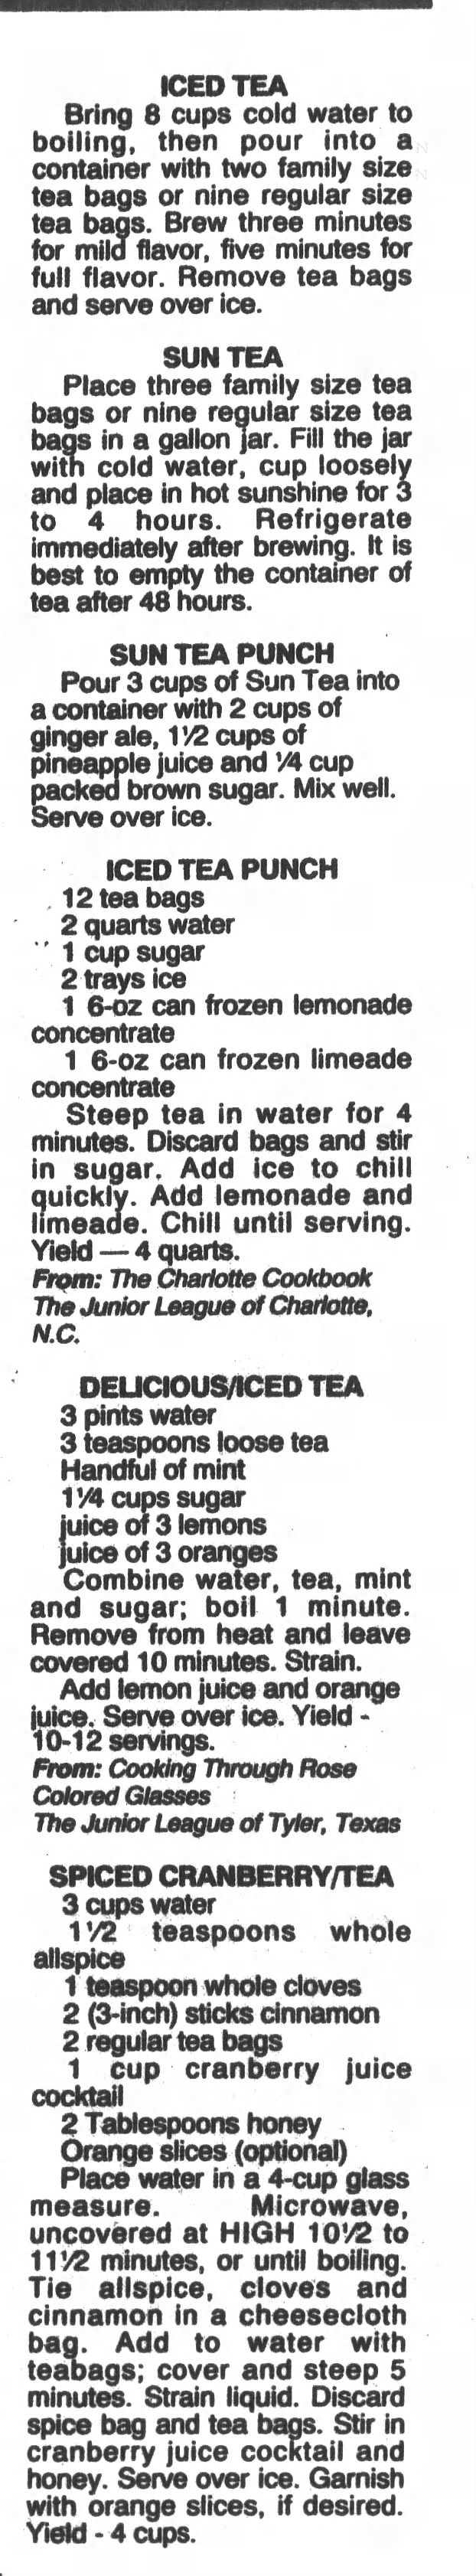 Iced tea and sun tea recipes (1995)